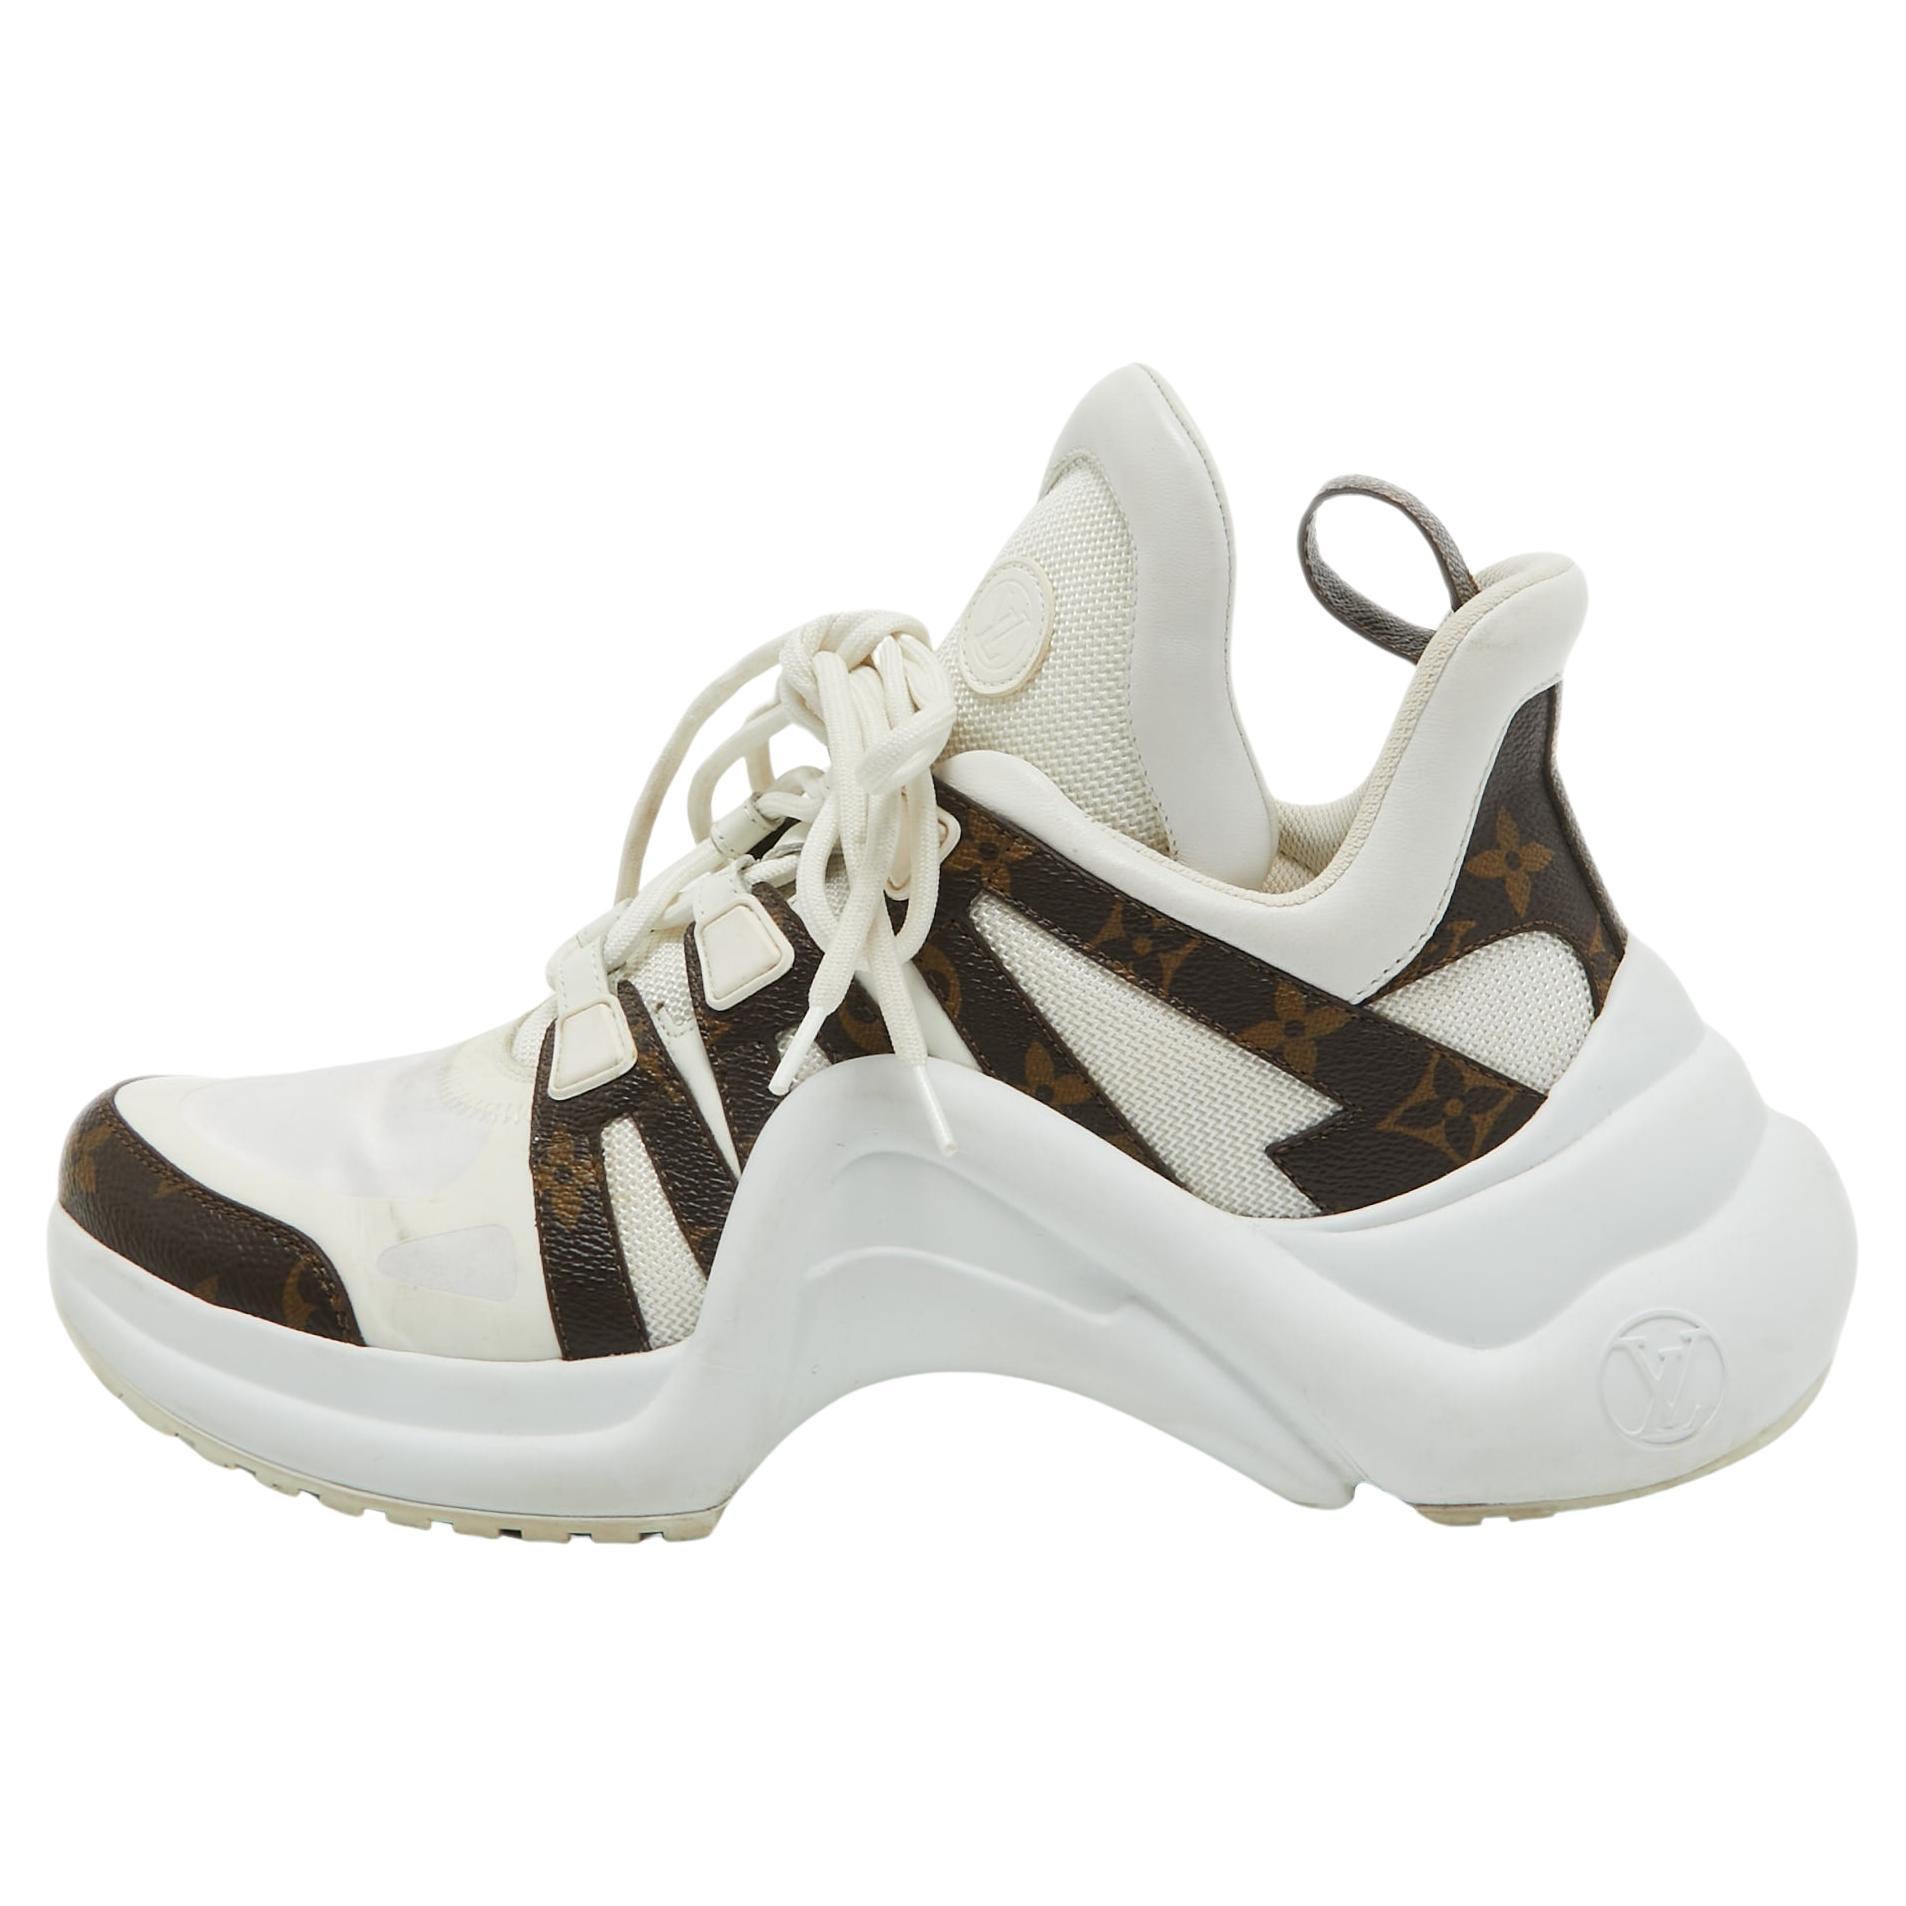 Louis Vuitton White/Brown Nylon and Monogram Canvas Archlight Sneakers Size 41